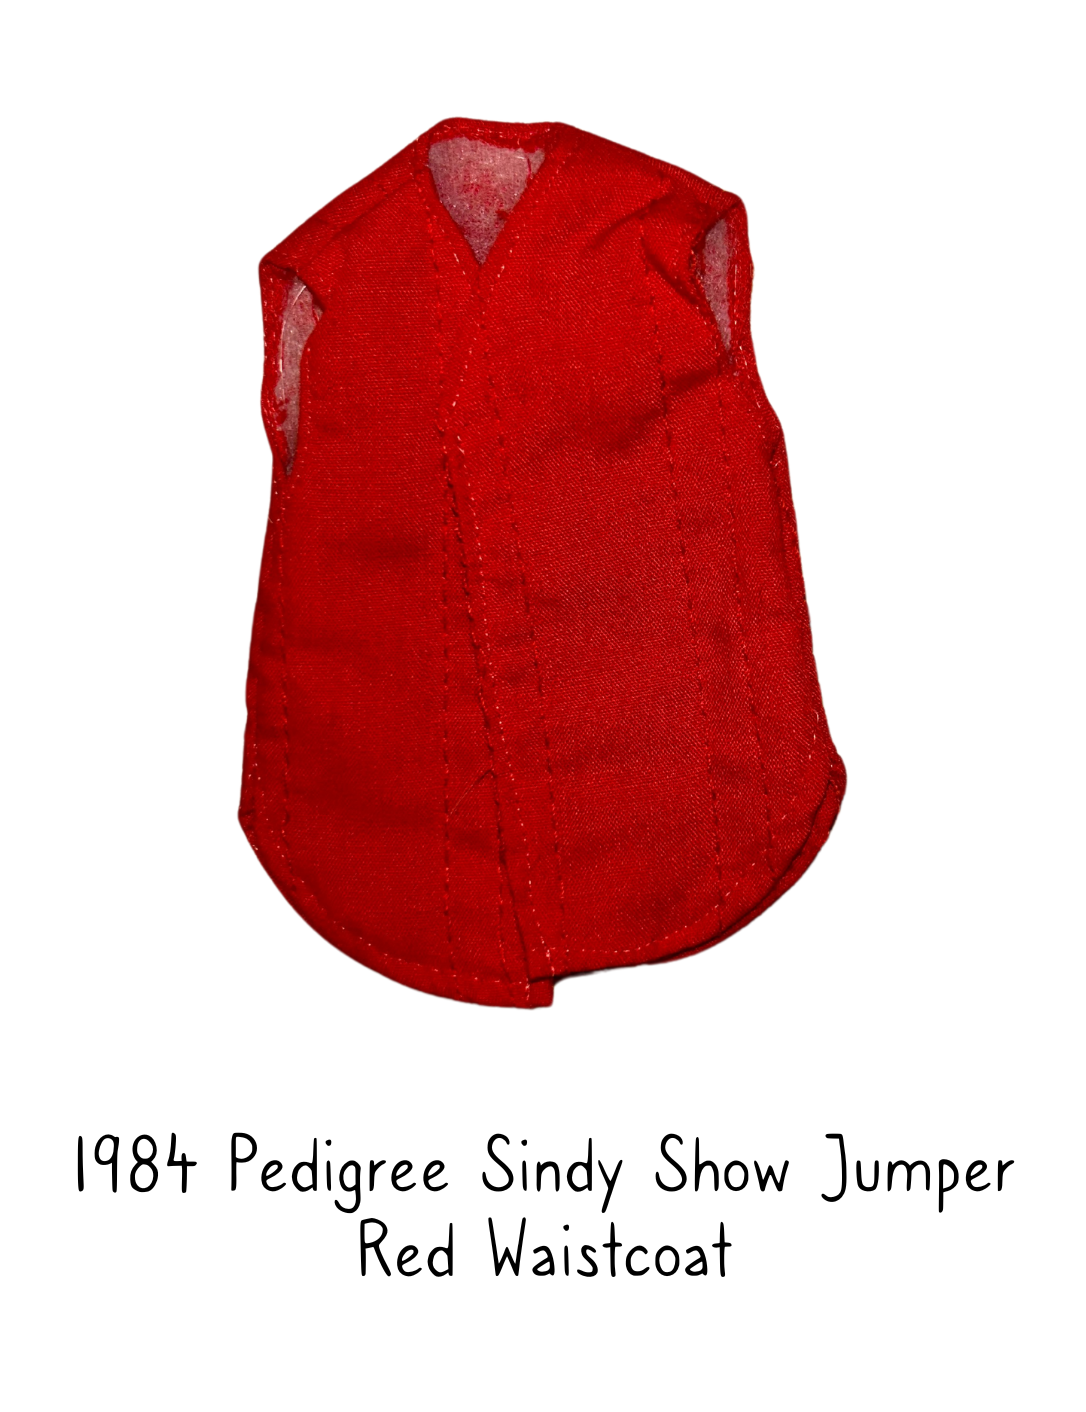 1984 Pedigree Sindy Fashion Doll Show Jumper Red Waistcoat